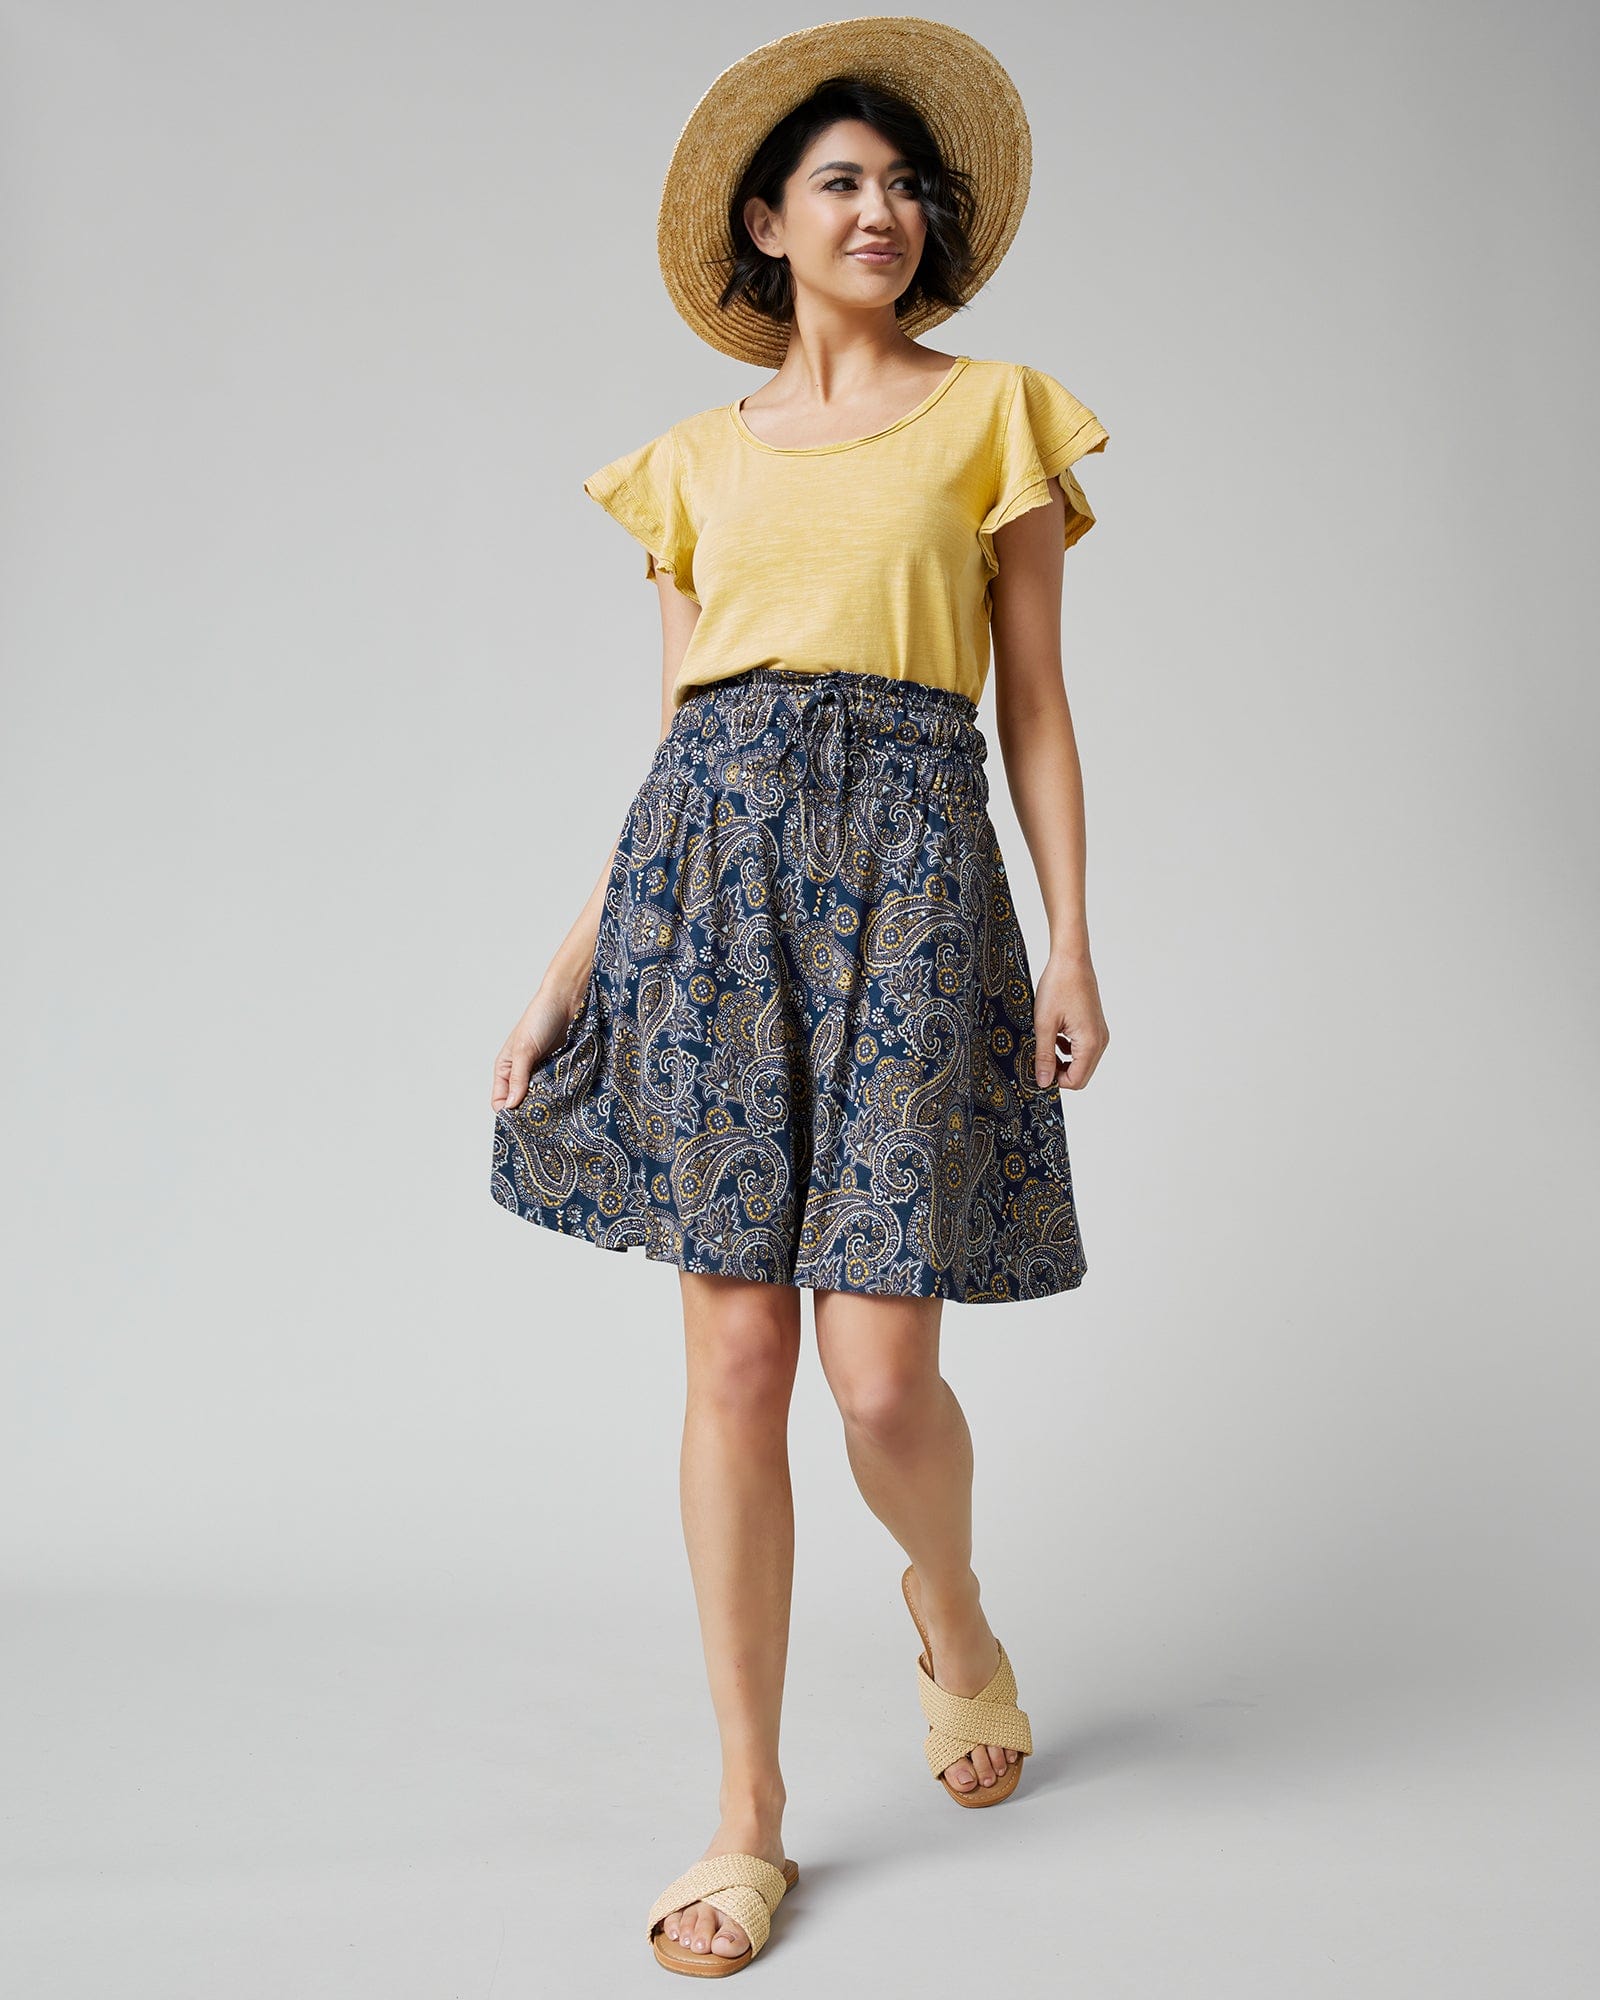 Woman in paisley, knee-length skirt